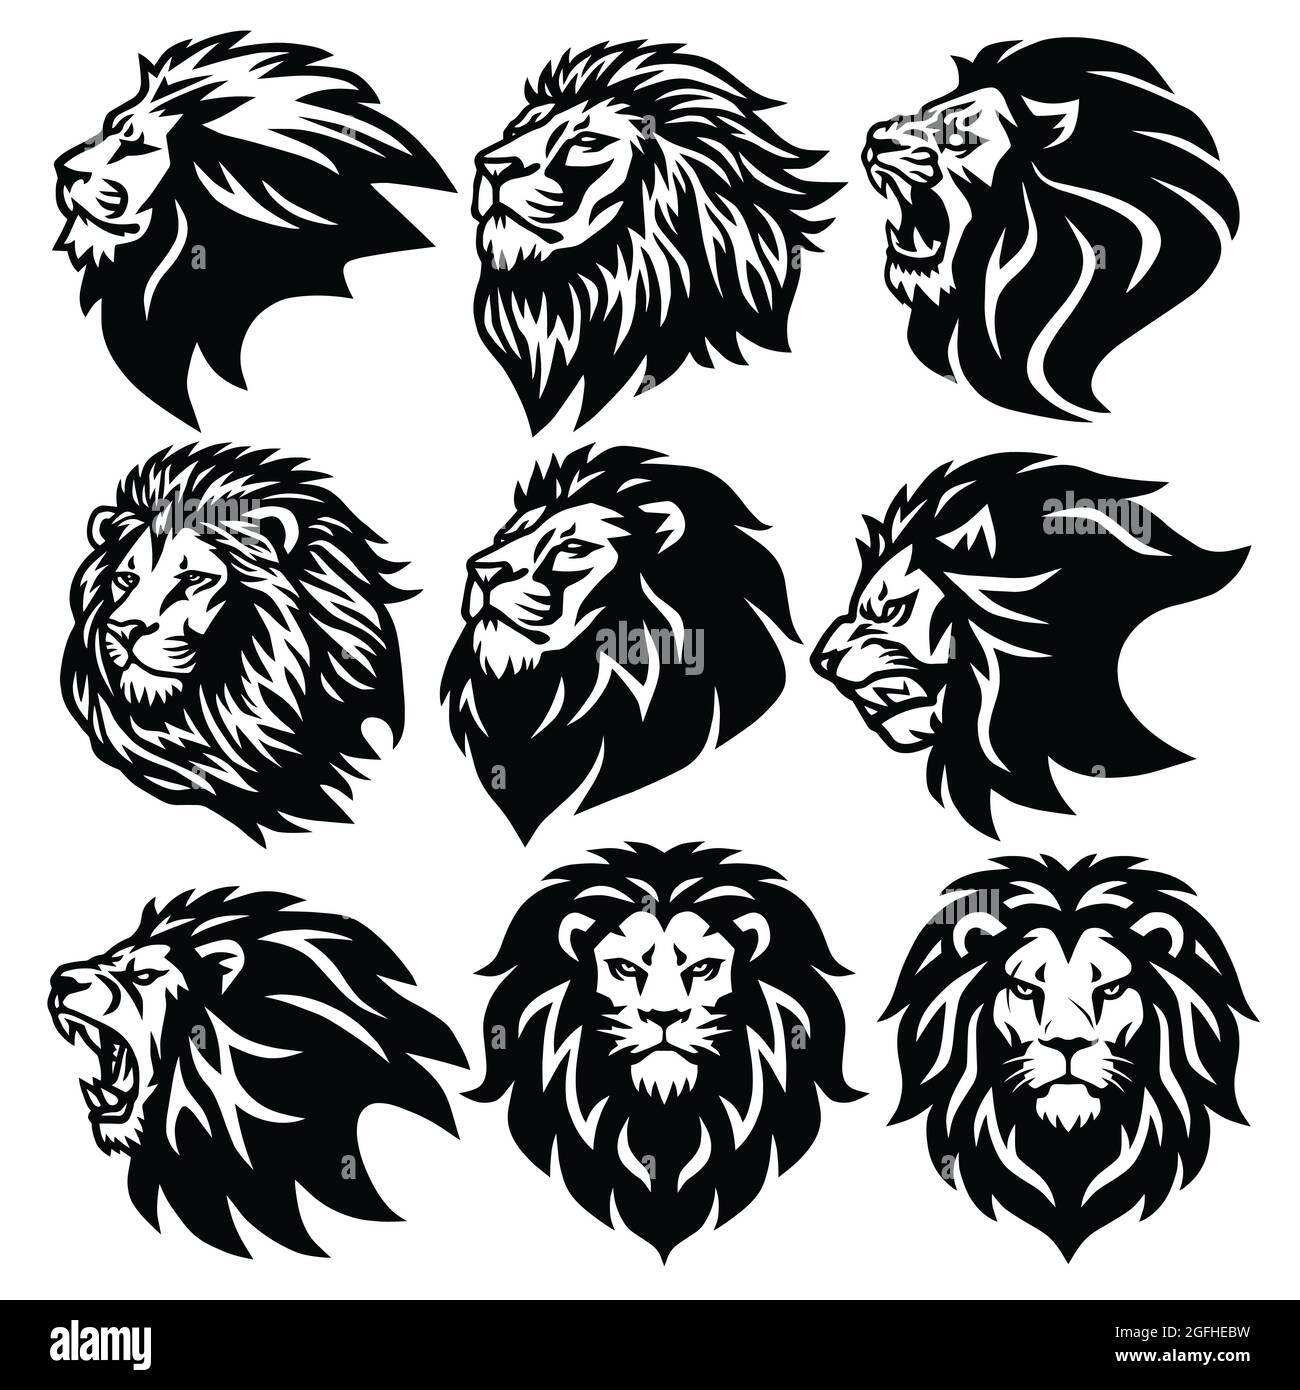 Lion logo Black and White Stock Photos & Images - Alamy